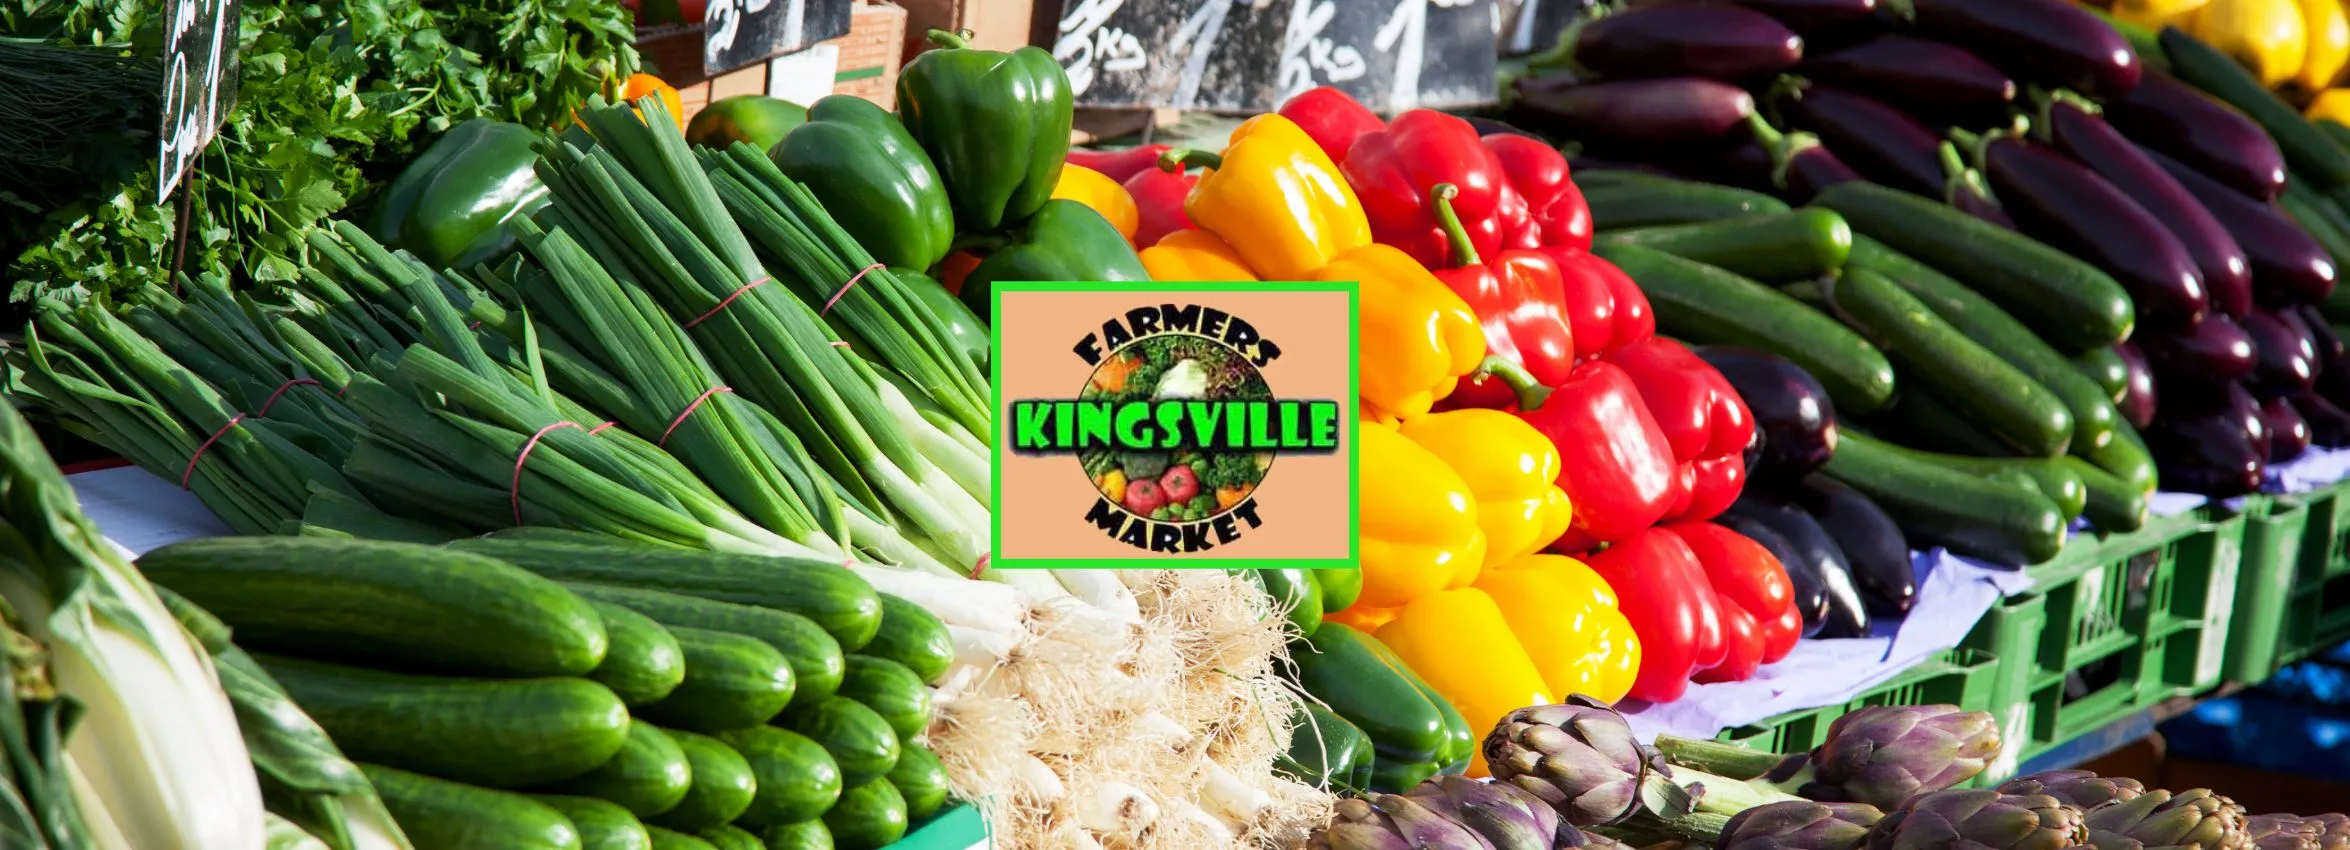 Kingsville-Farmers-Market_Desktop_ET